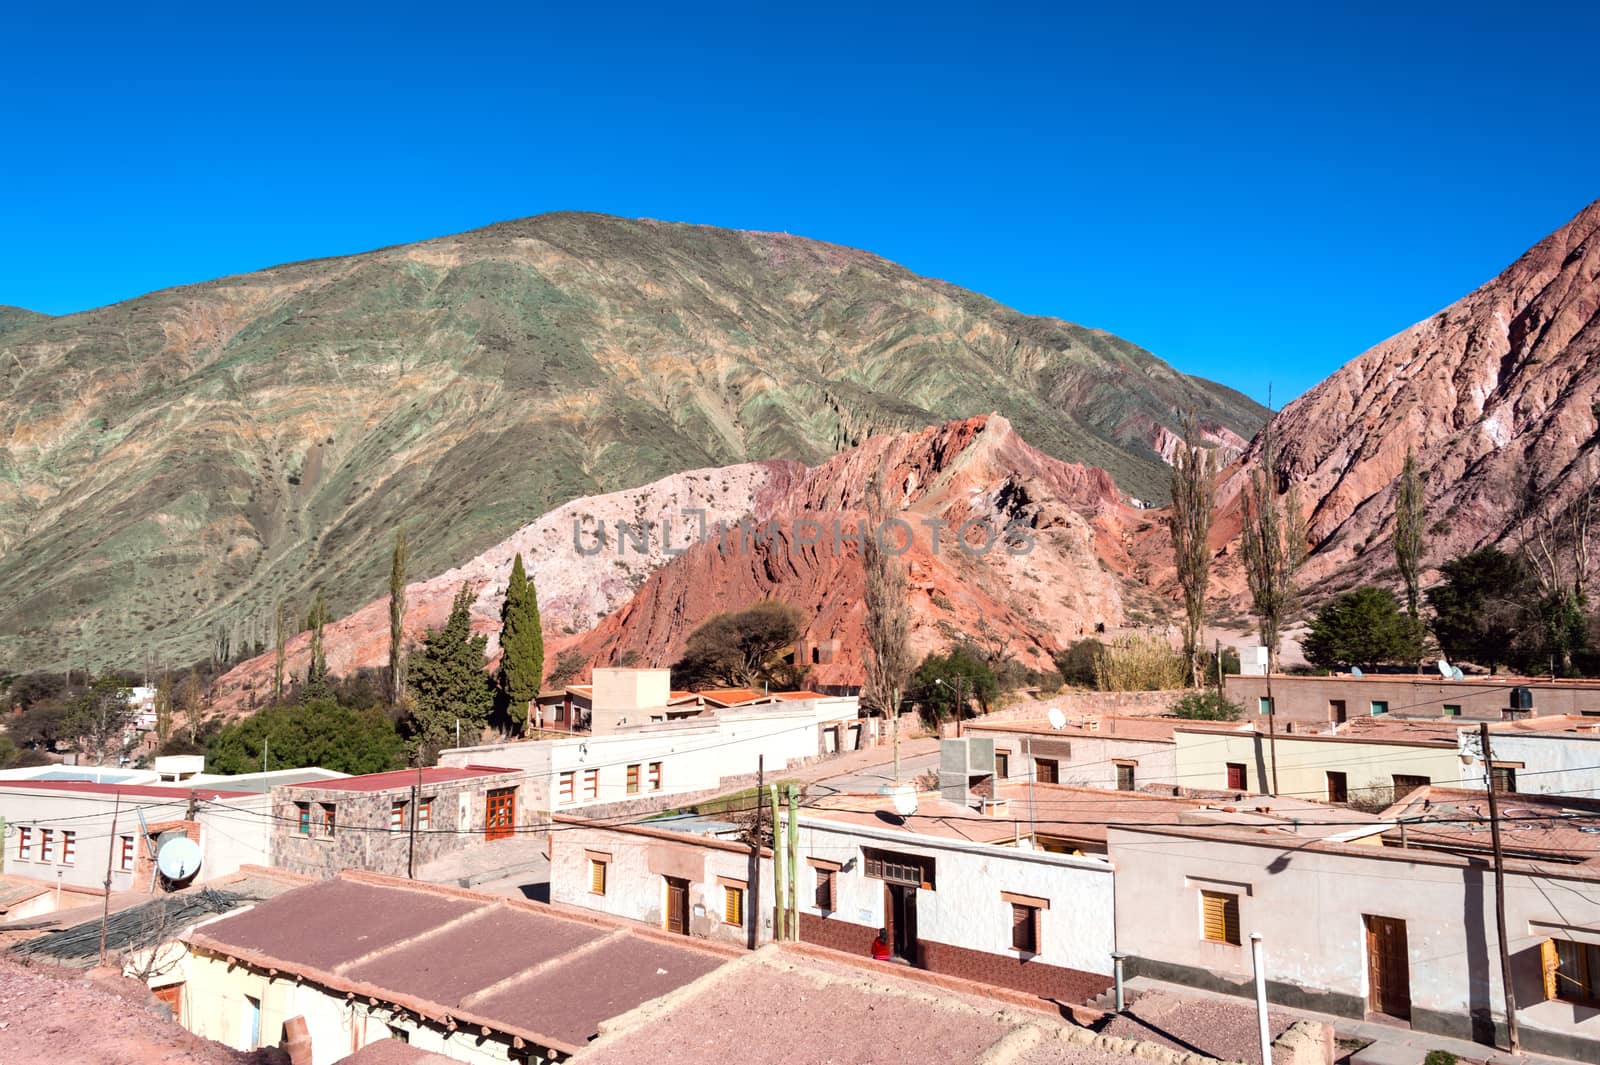 Purmamarca, Quebrada de Humahuaca, Hill of Seven Colours, Andes, Chile-Argentina-Bolivia border